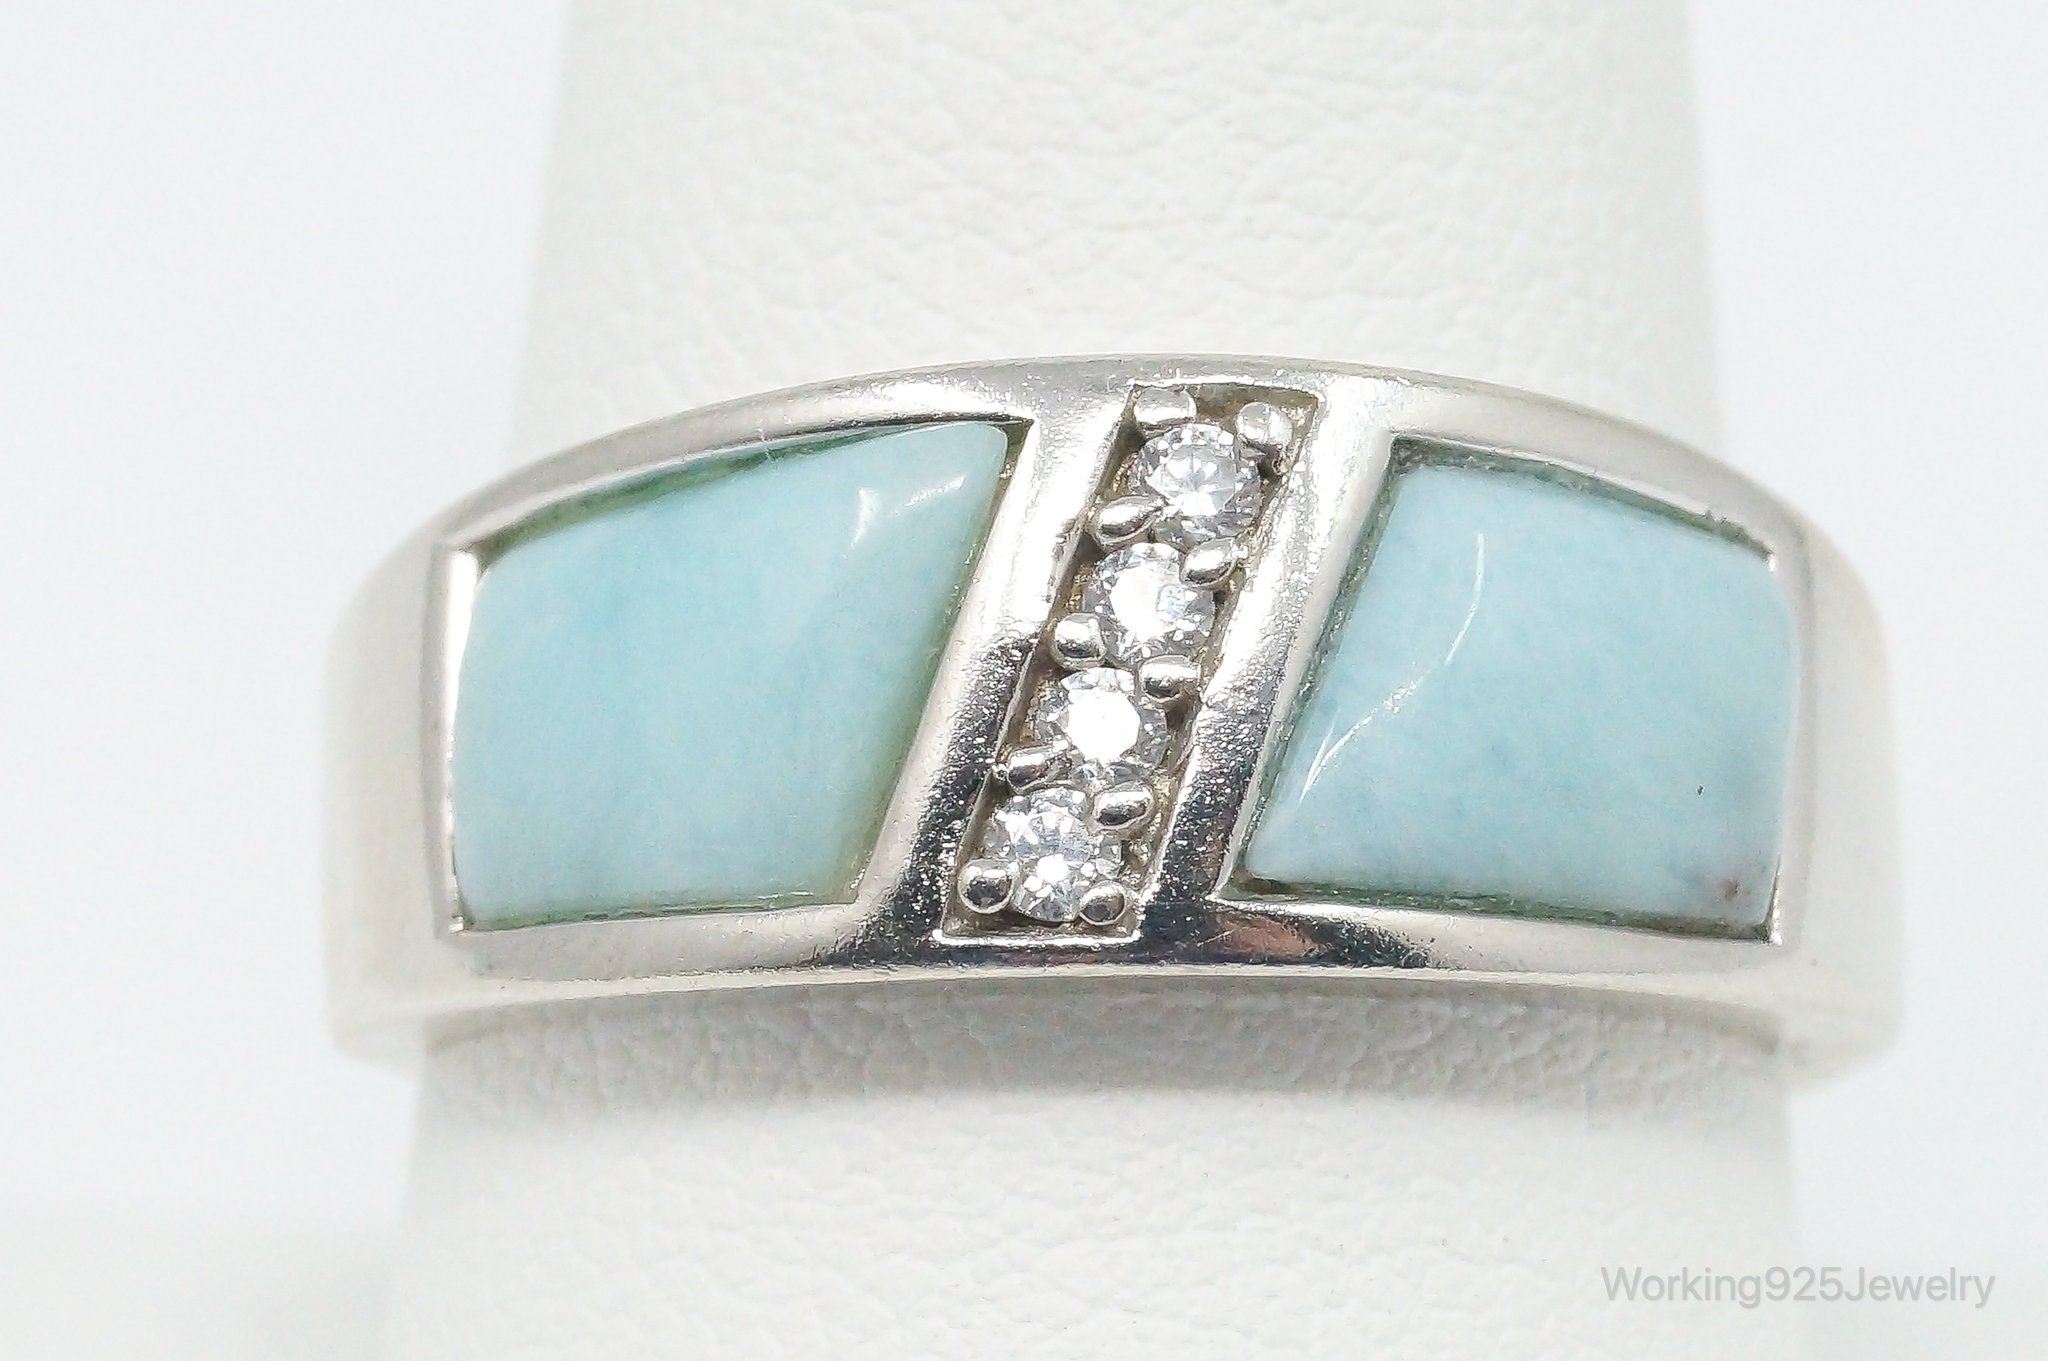 Vintage Blue Larimar Cubic Zirconia Sterling Silver Ring - Size 9.75